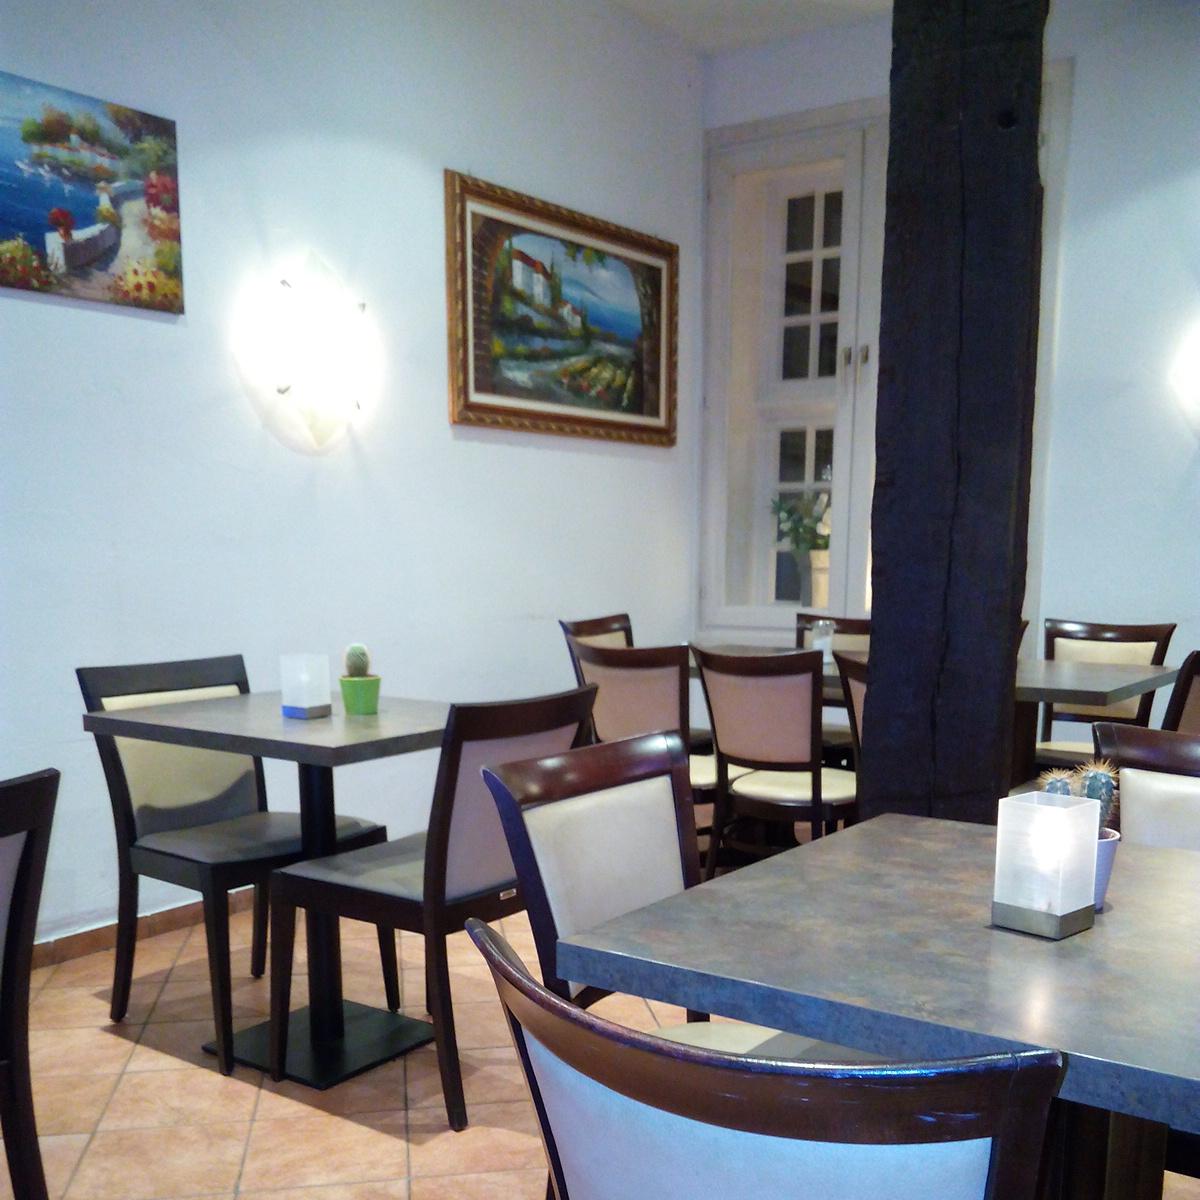 Restaurant "Da Seba Cafebar Pizzaria Inh. Sebastino Sederino" in Quakenbrück